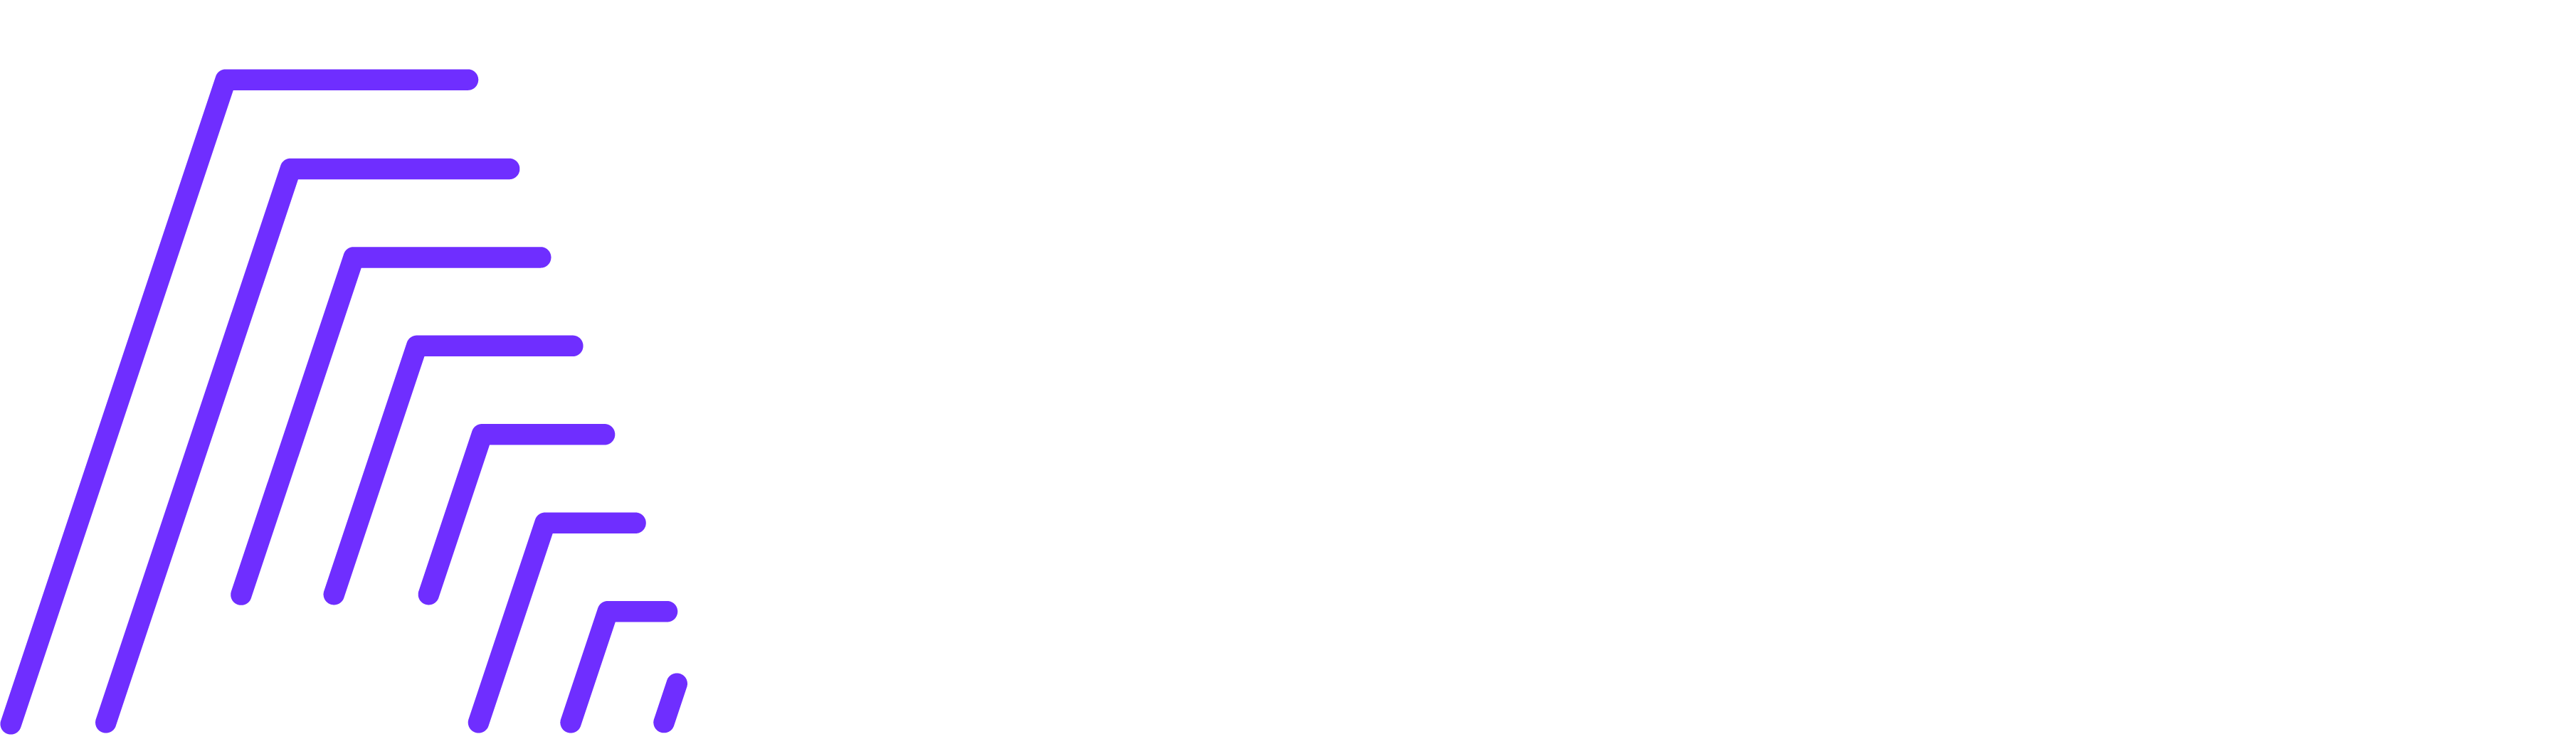 Cynosure Academy